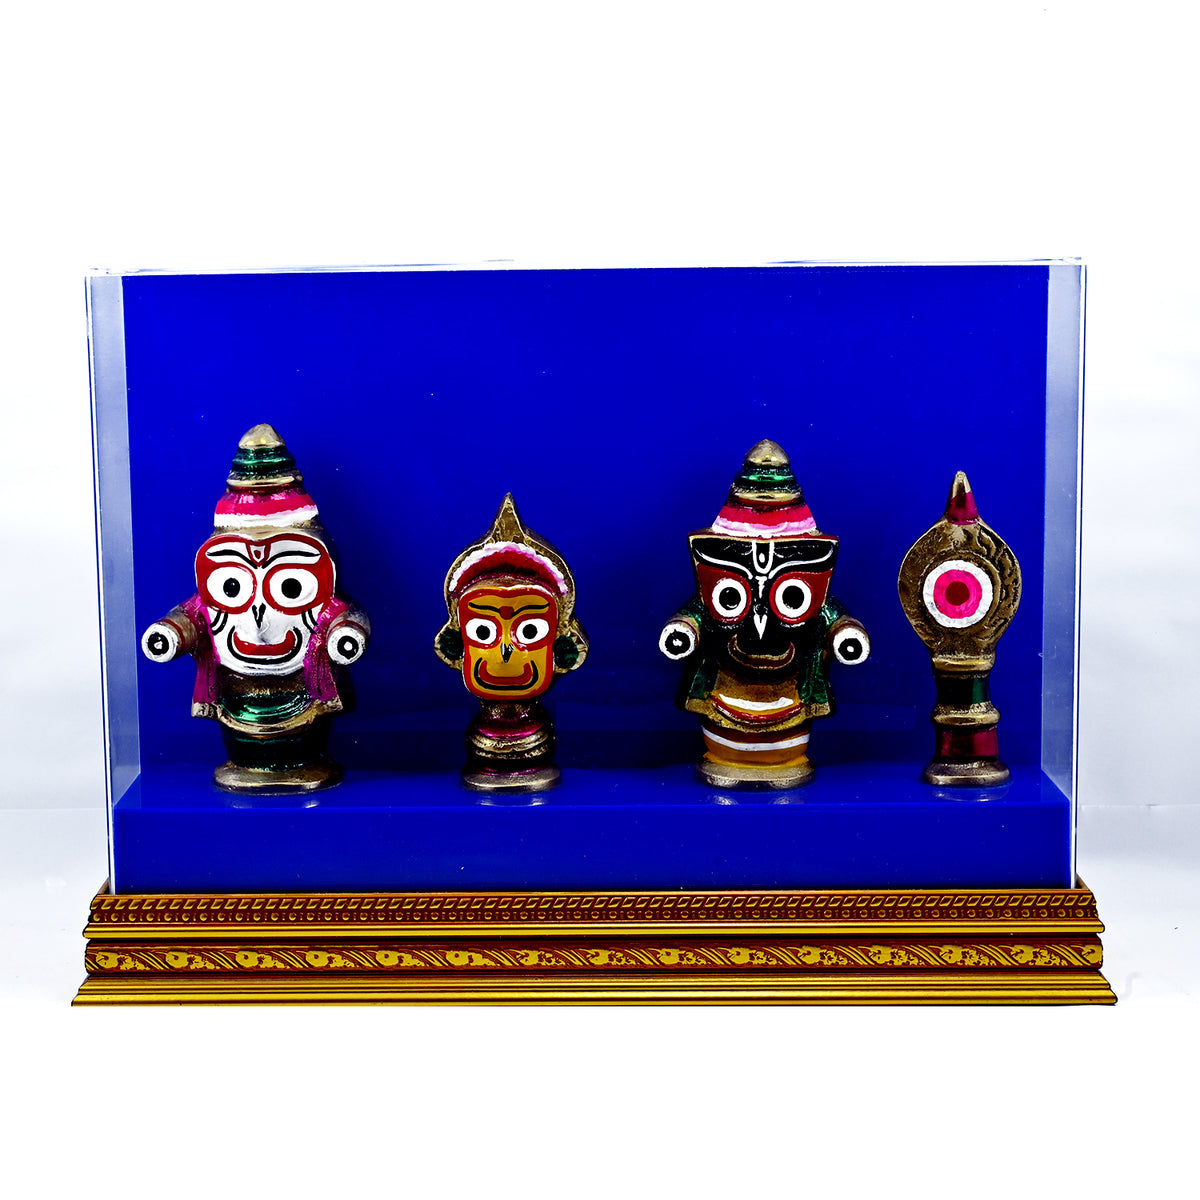 SmileSellers Jagannath Balabhadra subhadra Show Piece ,Handmade brass idol in glass box